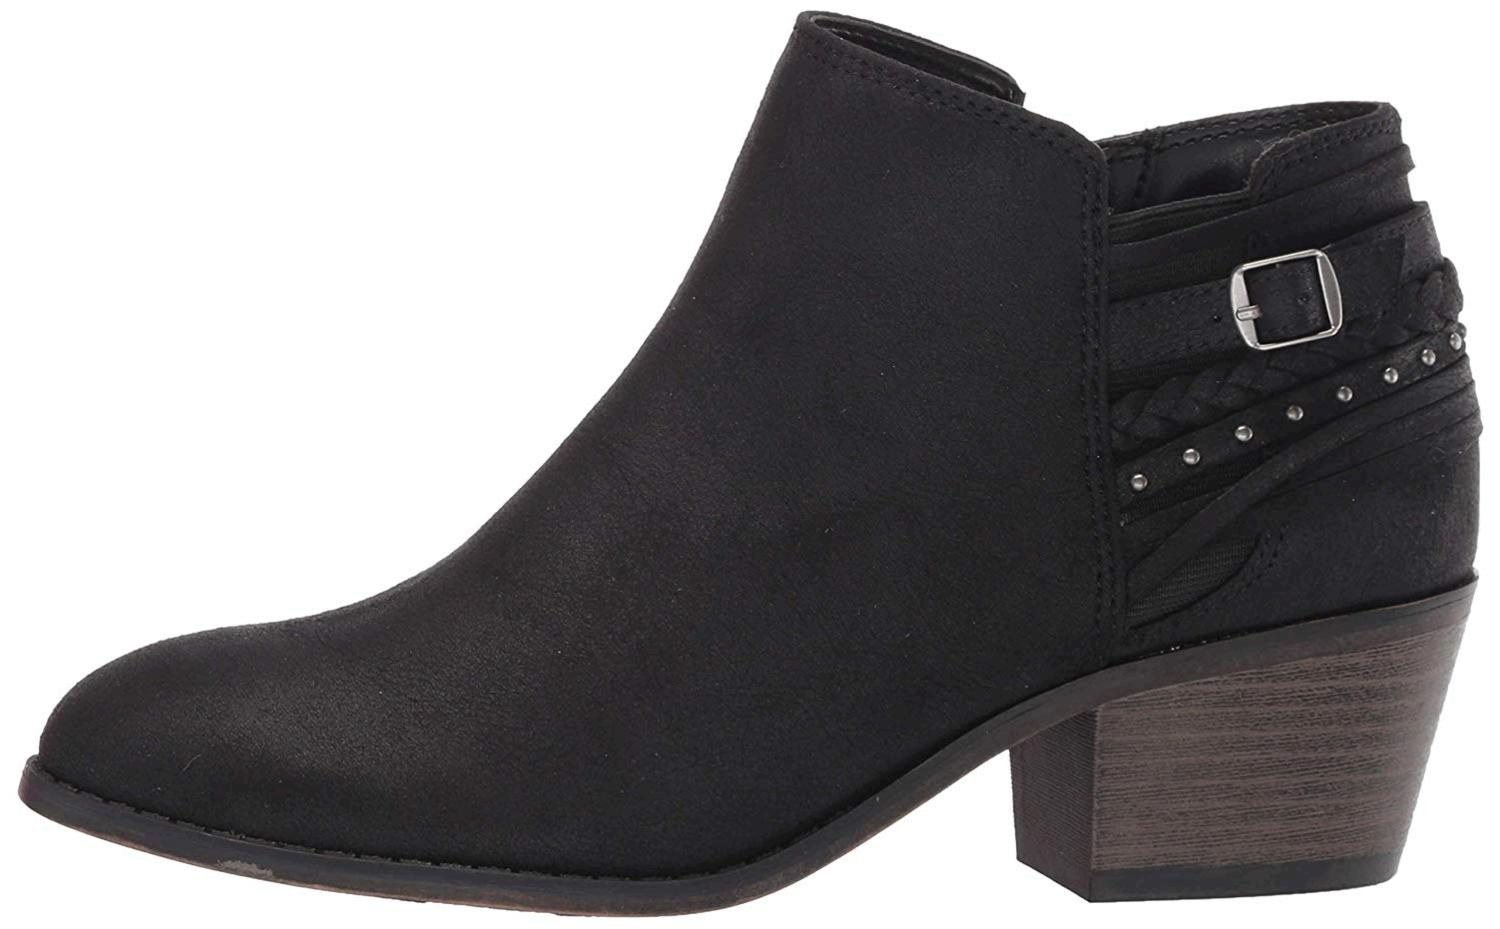 Fergalicious Women's Brawn Ankle Boot, Black, Size 8.5 sVQc | eBay